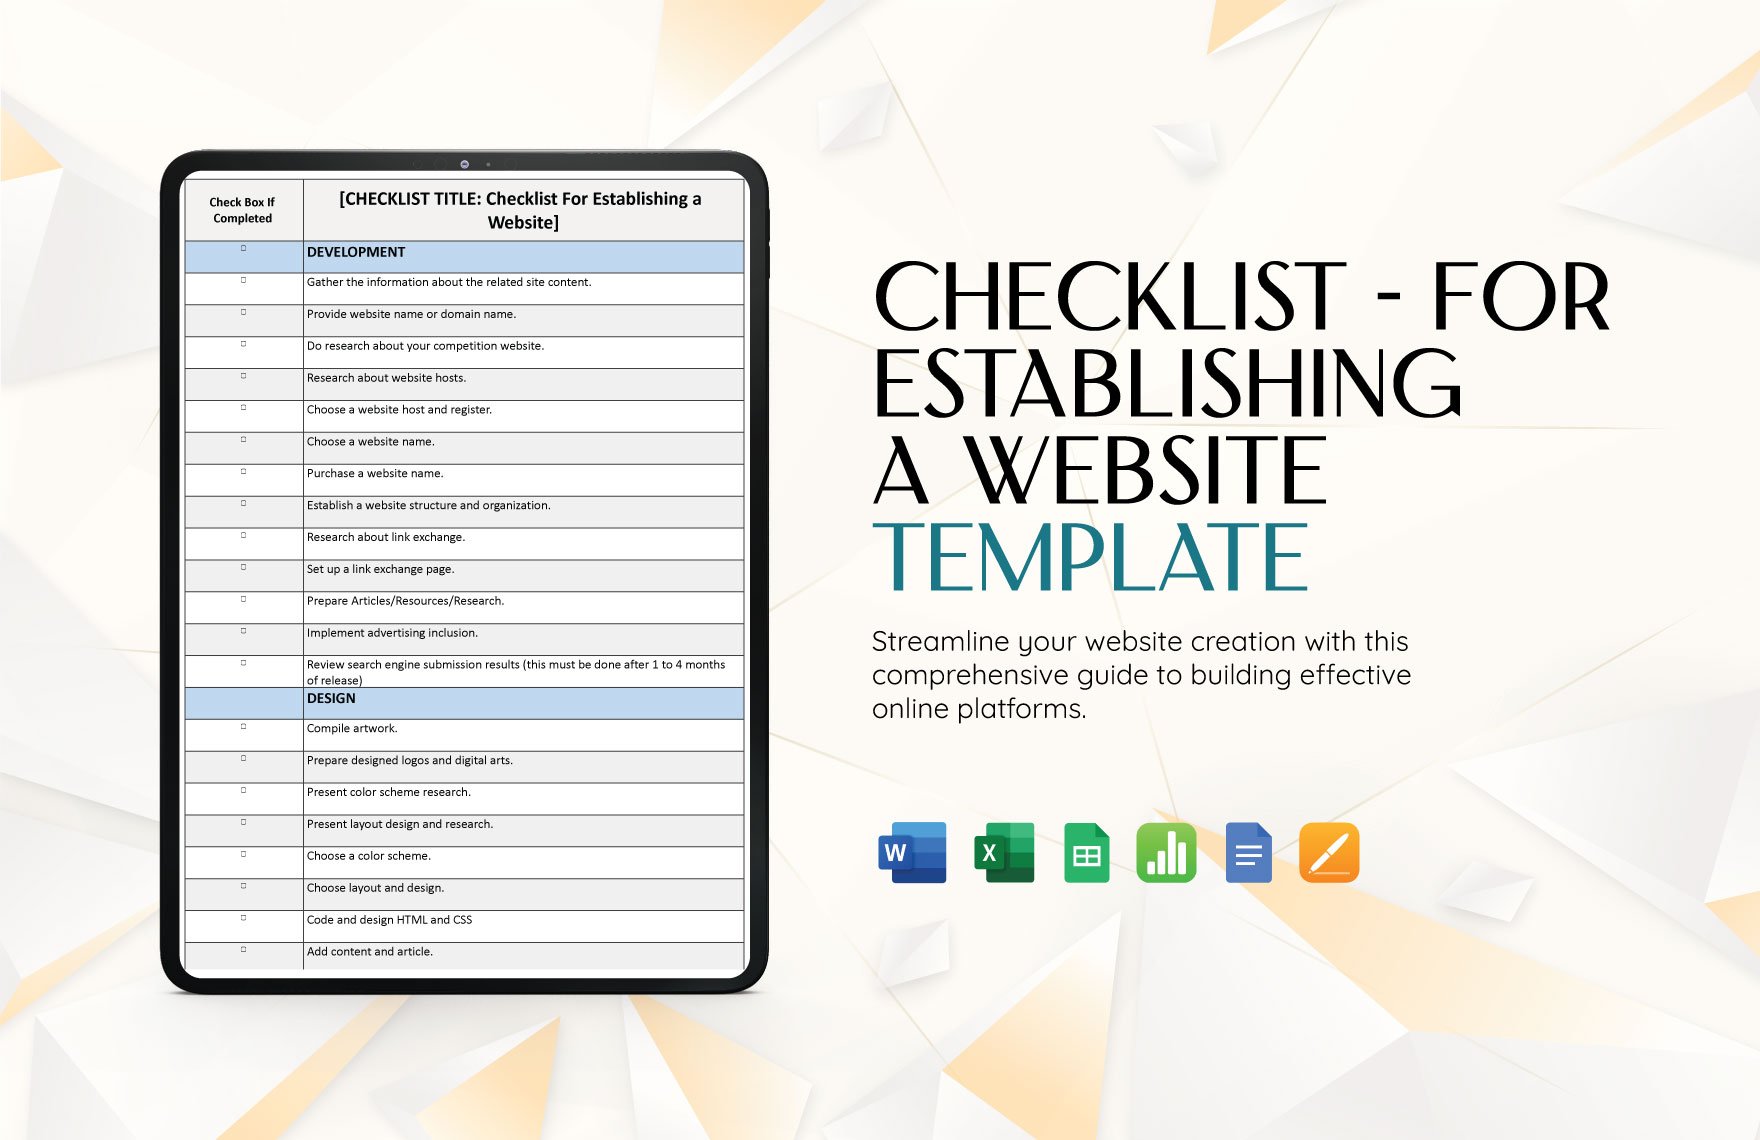 Checklist - For Establishing a Website Template